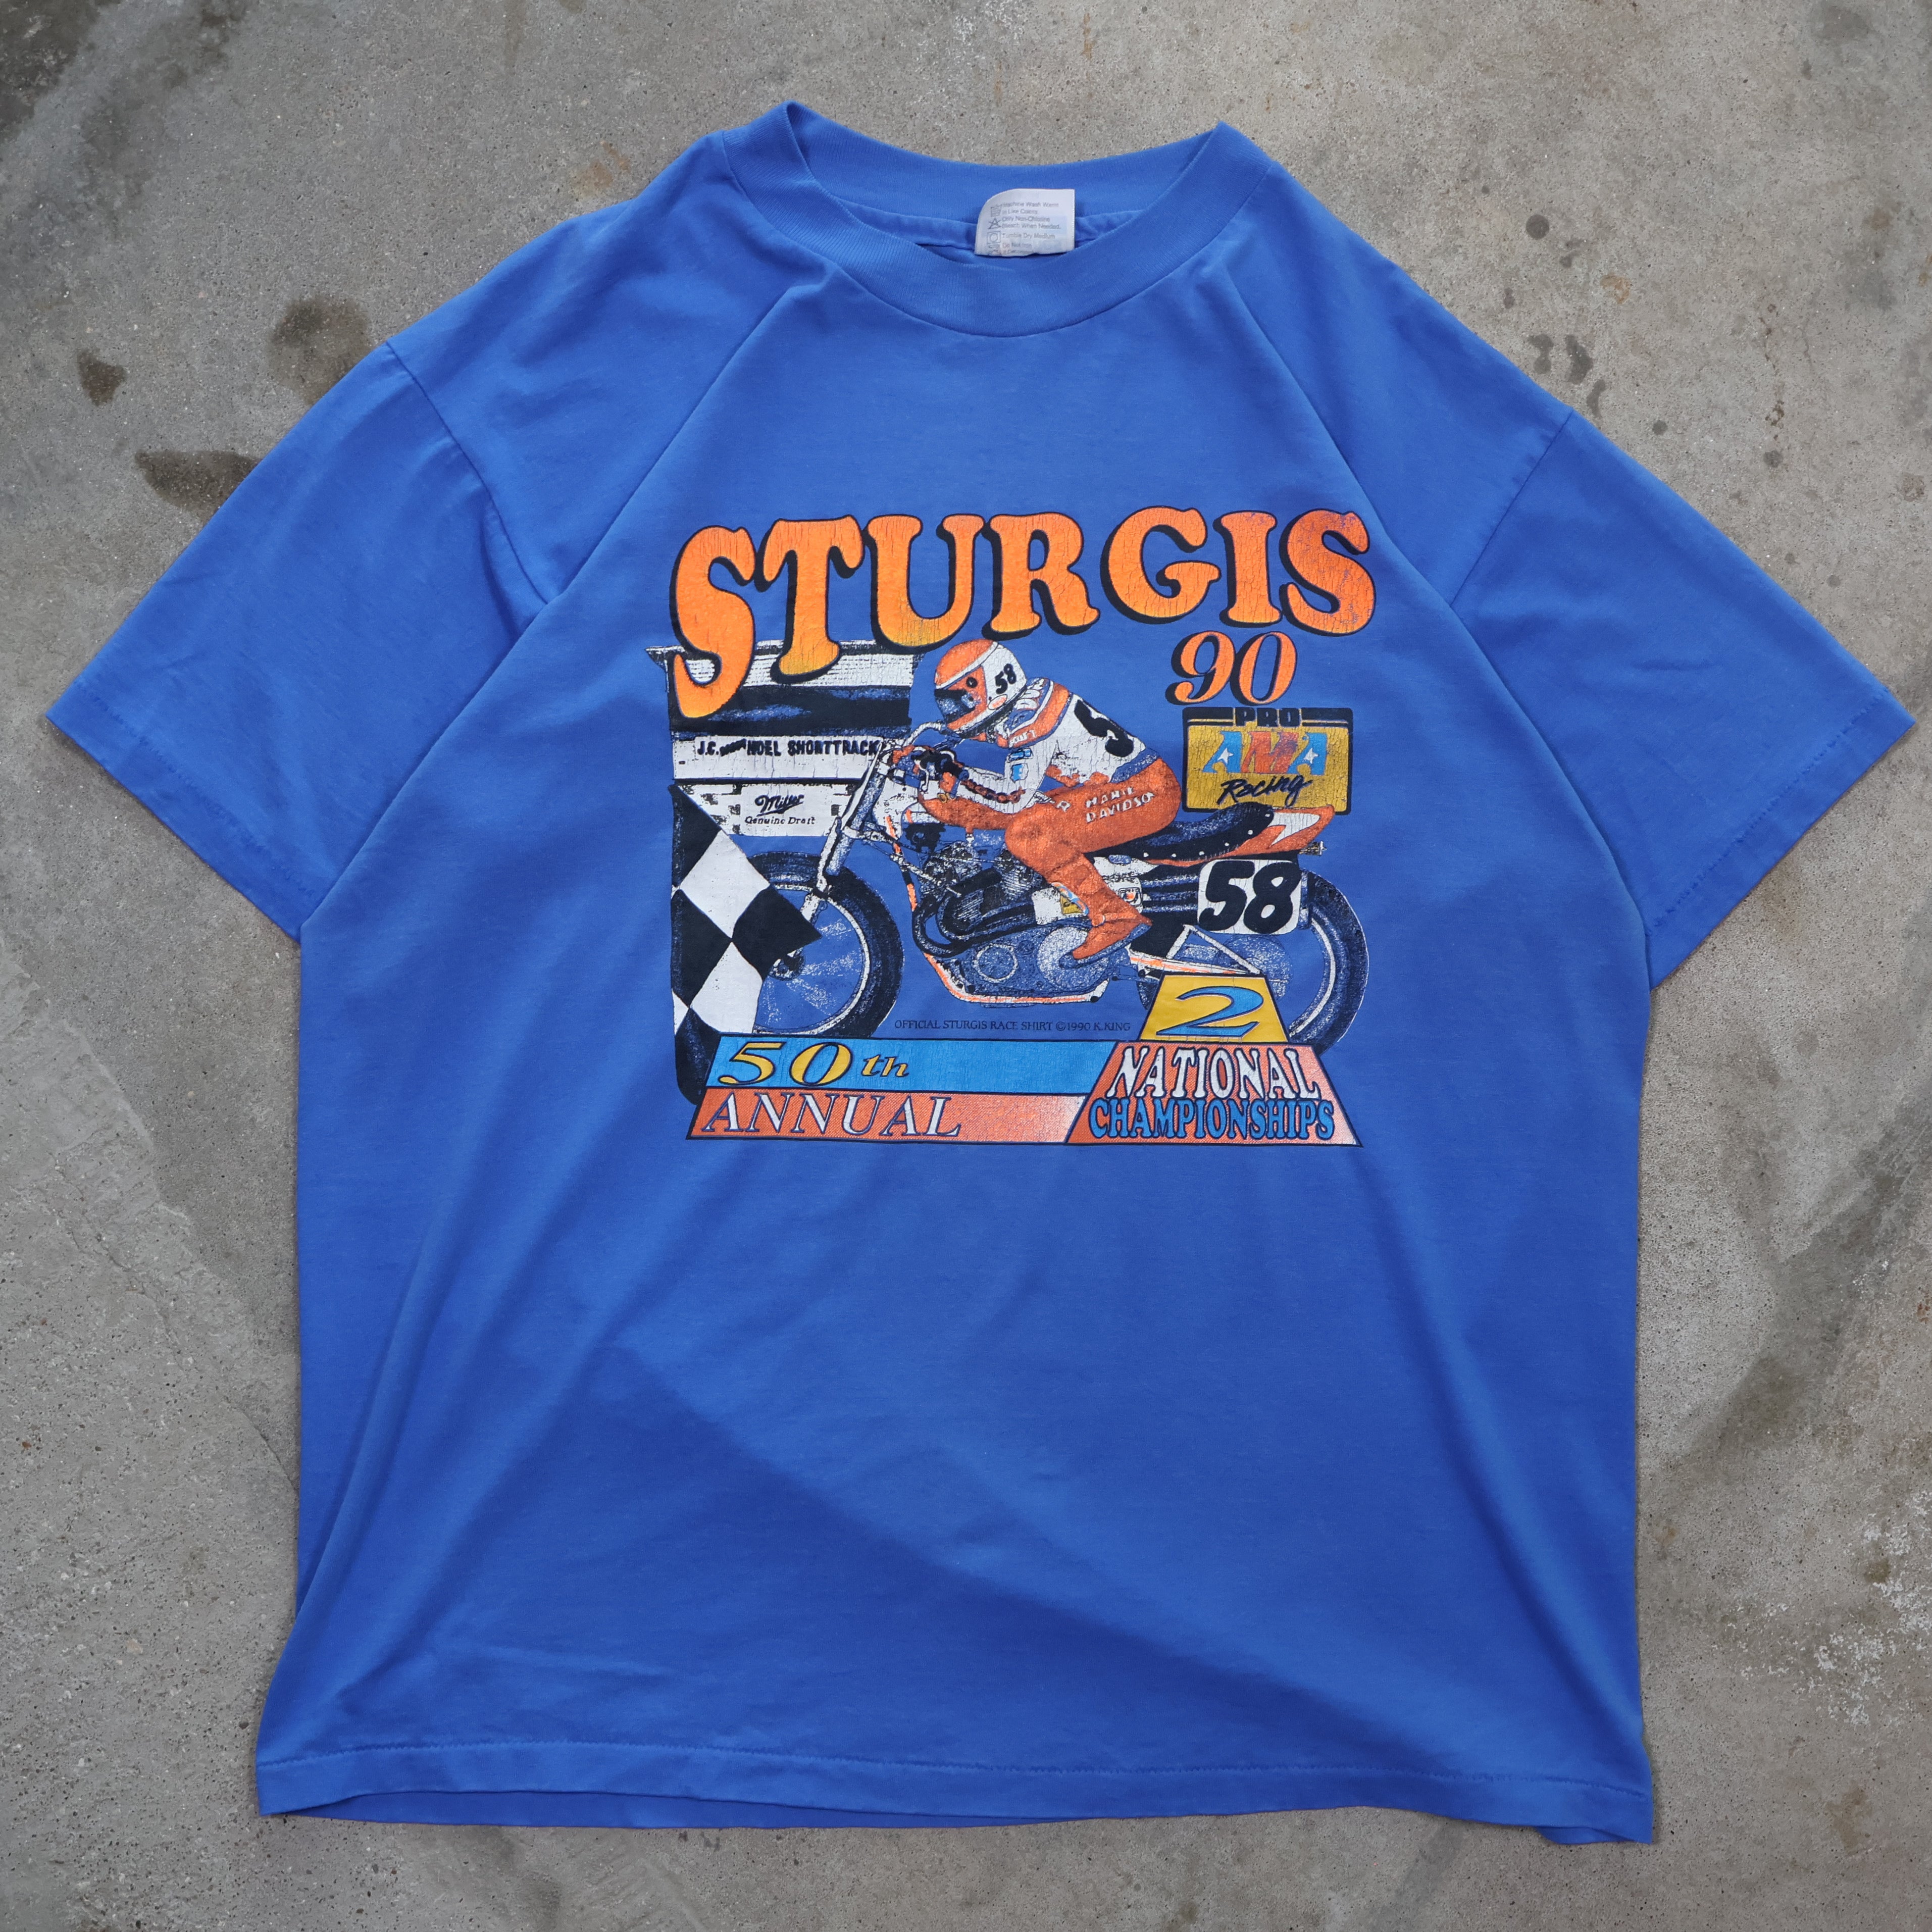 Sturgis Pro AMA Racing National Championship T-Shirt 1990 (Large)